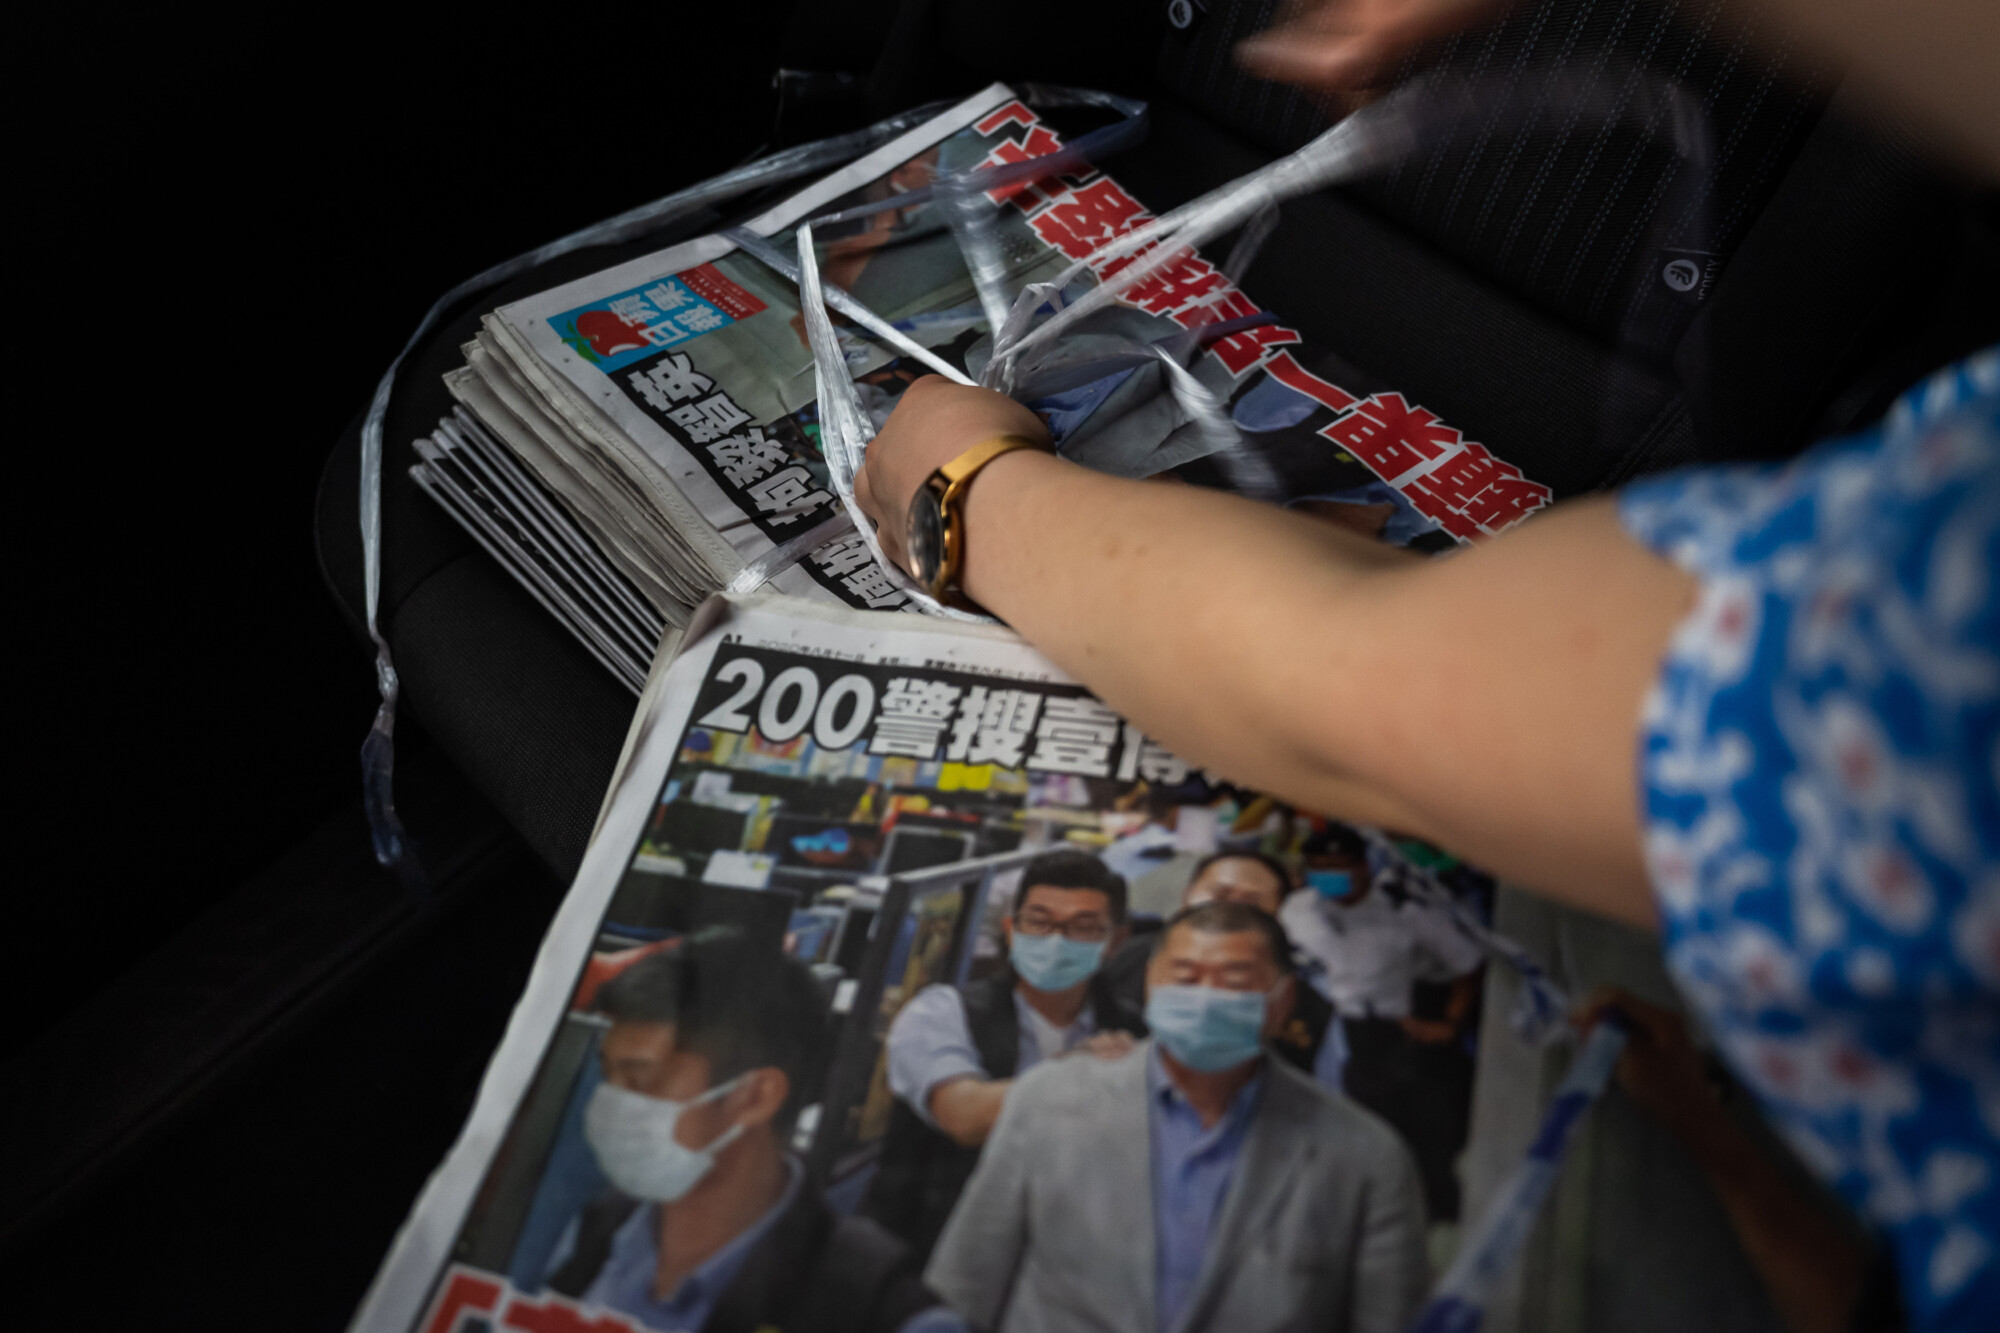 Press Freedom Index Ranks Hong Kong 80th in World